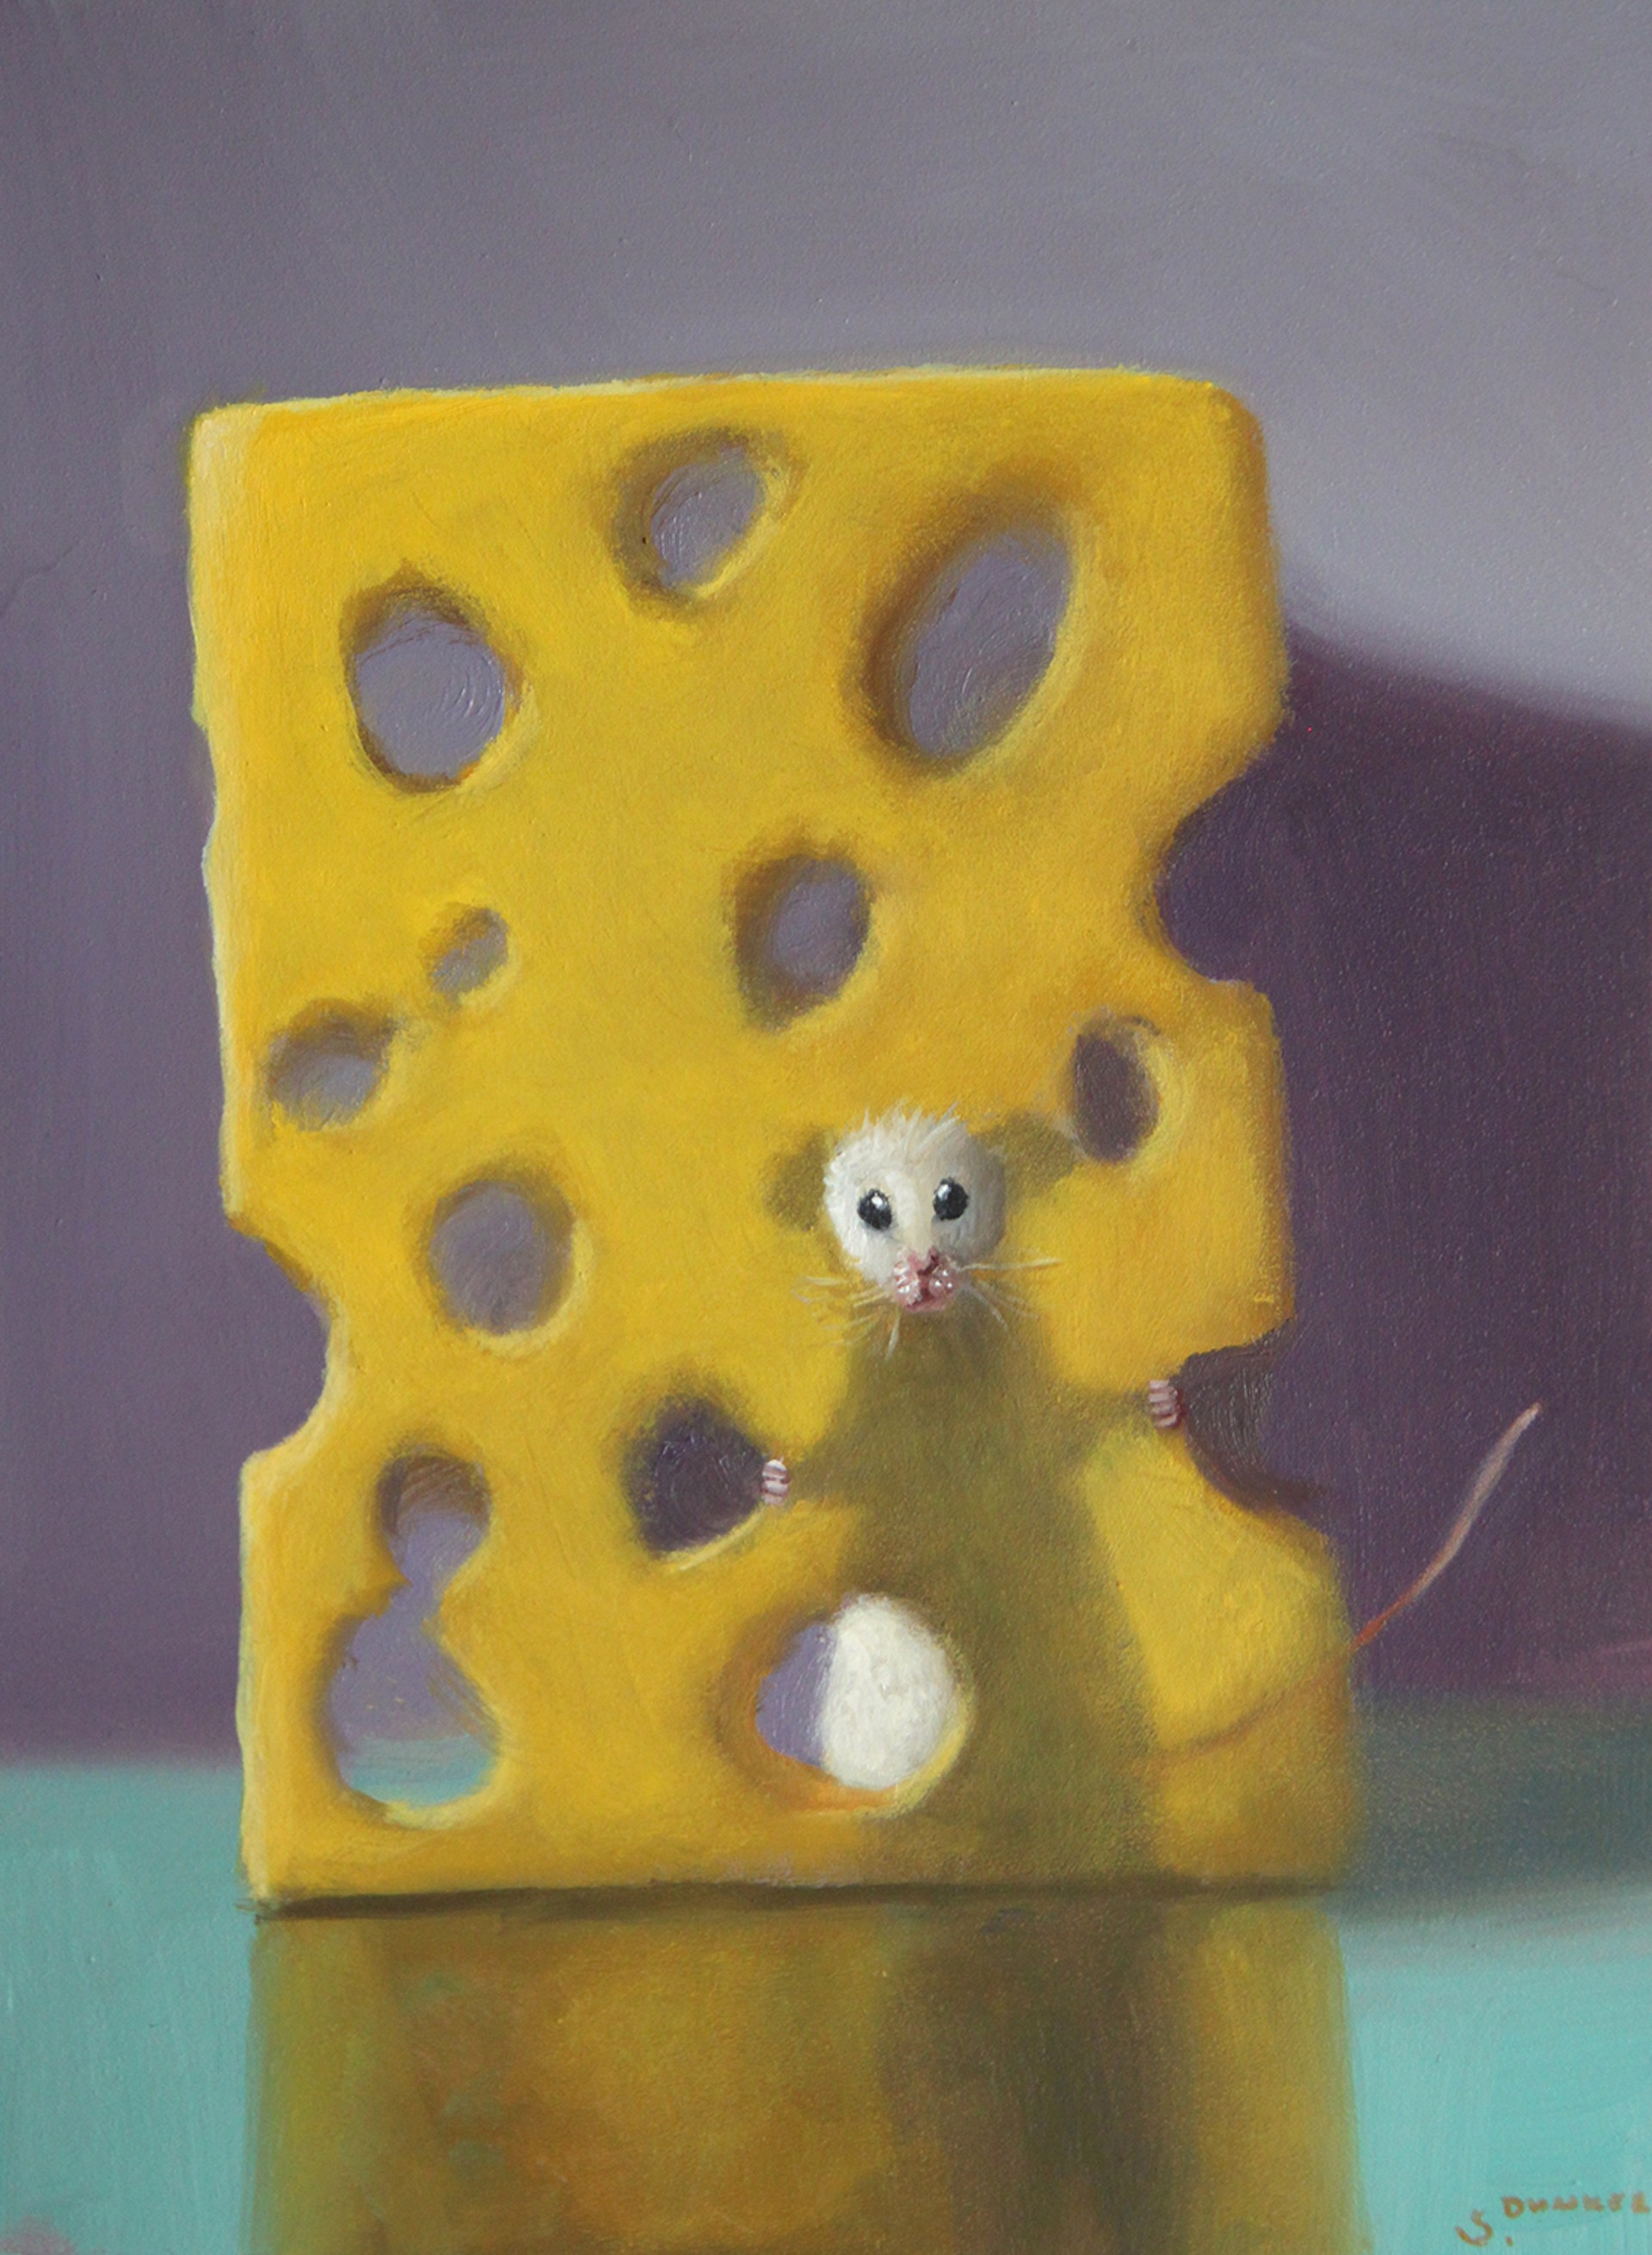 Cheese Tax by Stuart Dunkel